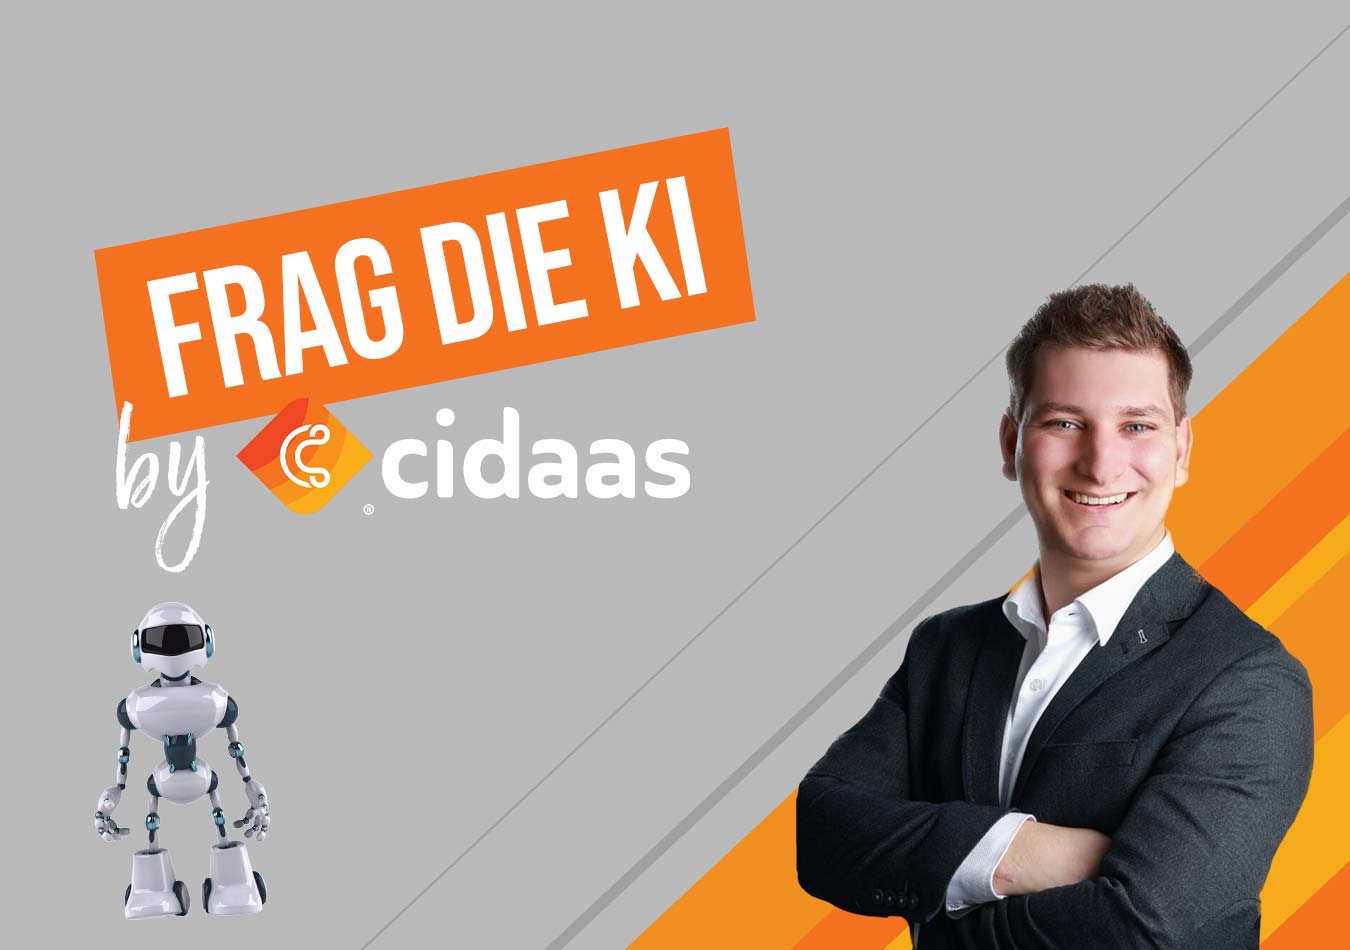 “„Frag die KI by cidaas“ – Das smarte Interviewformat ” - The smart interview format